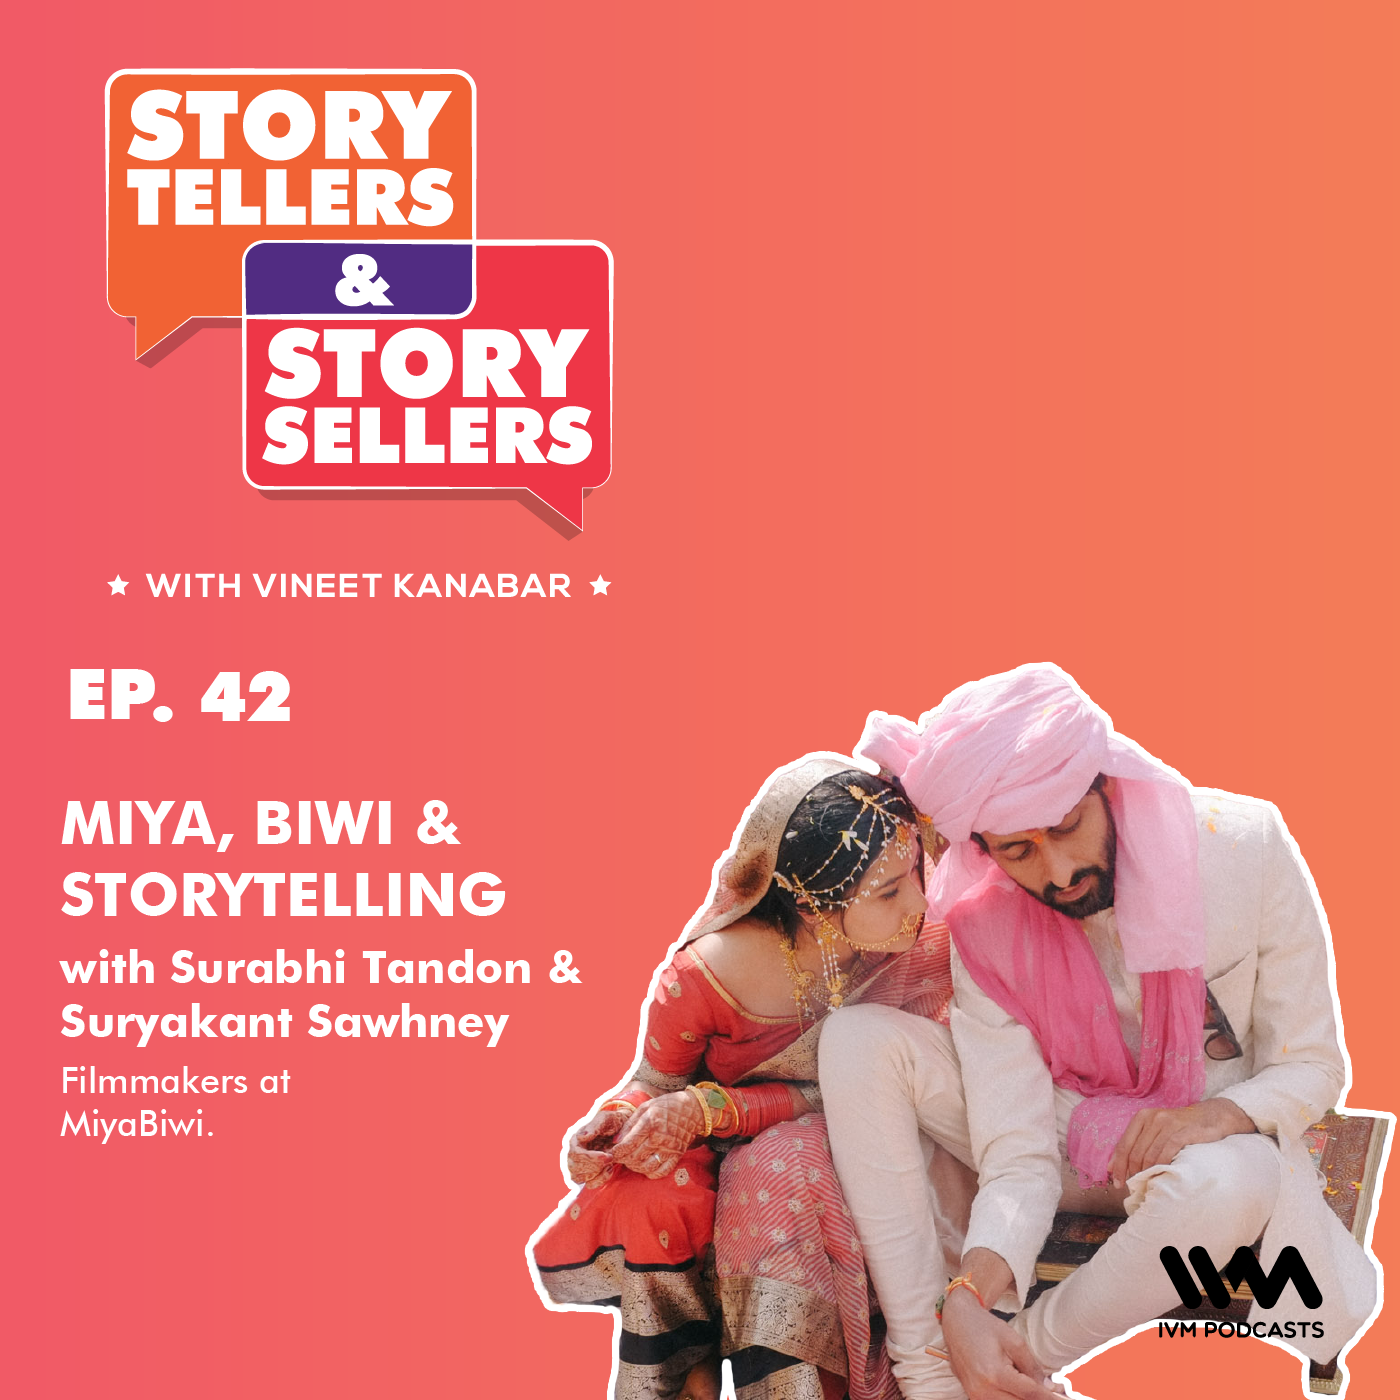 Surabhi Tandon & Suryakant Sawhney: Miya, Biwi & Storytelling